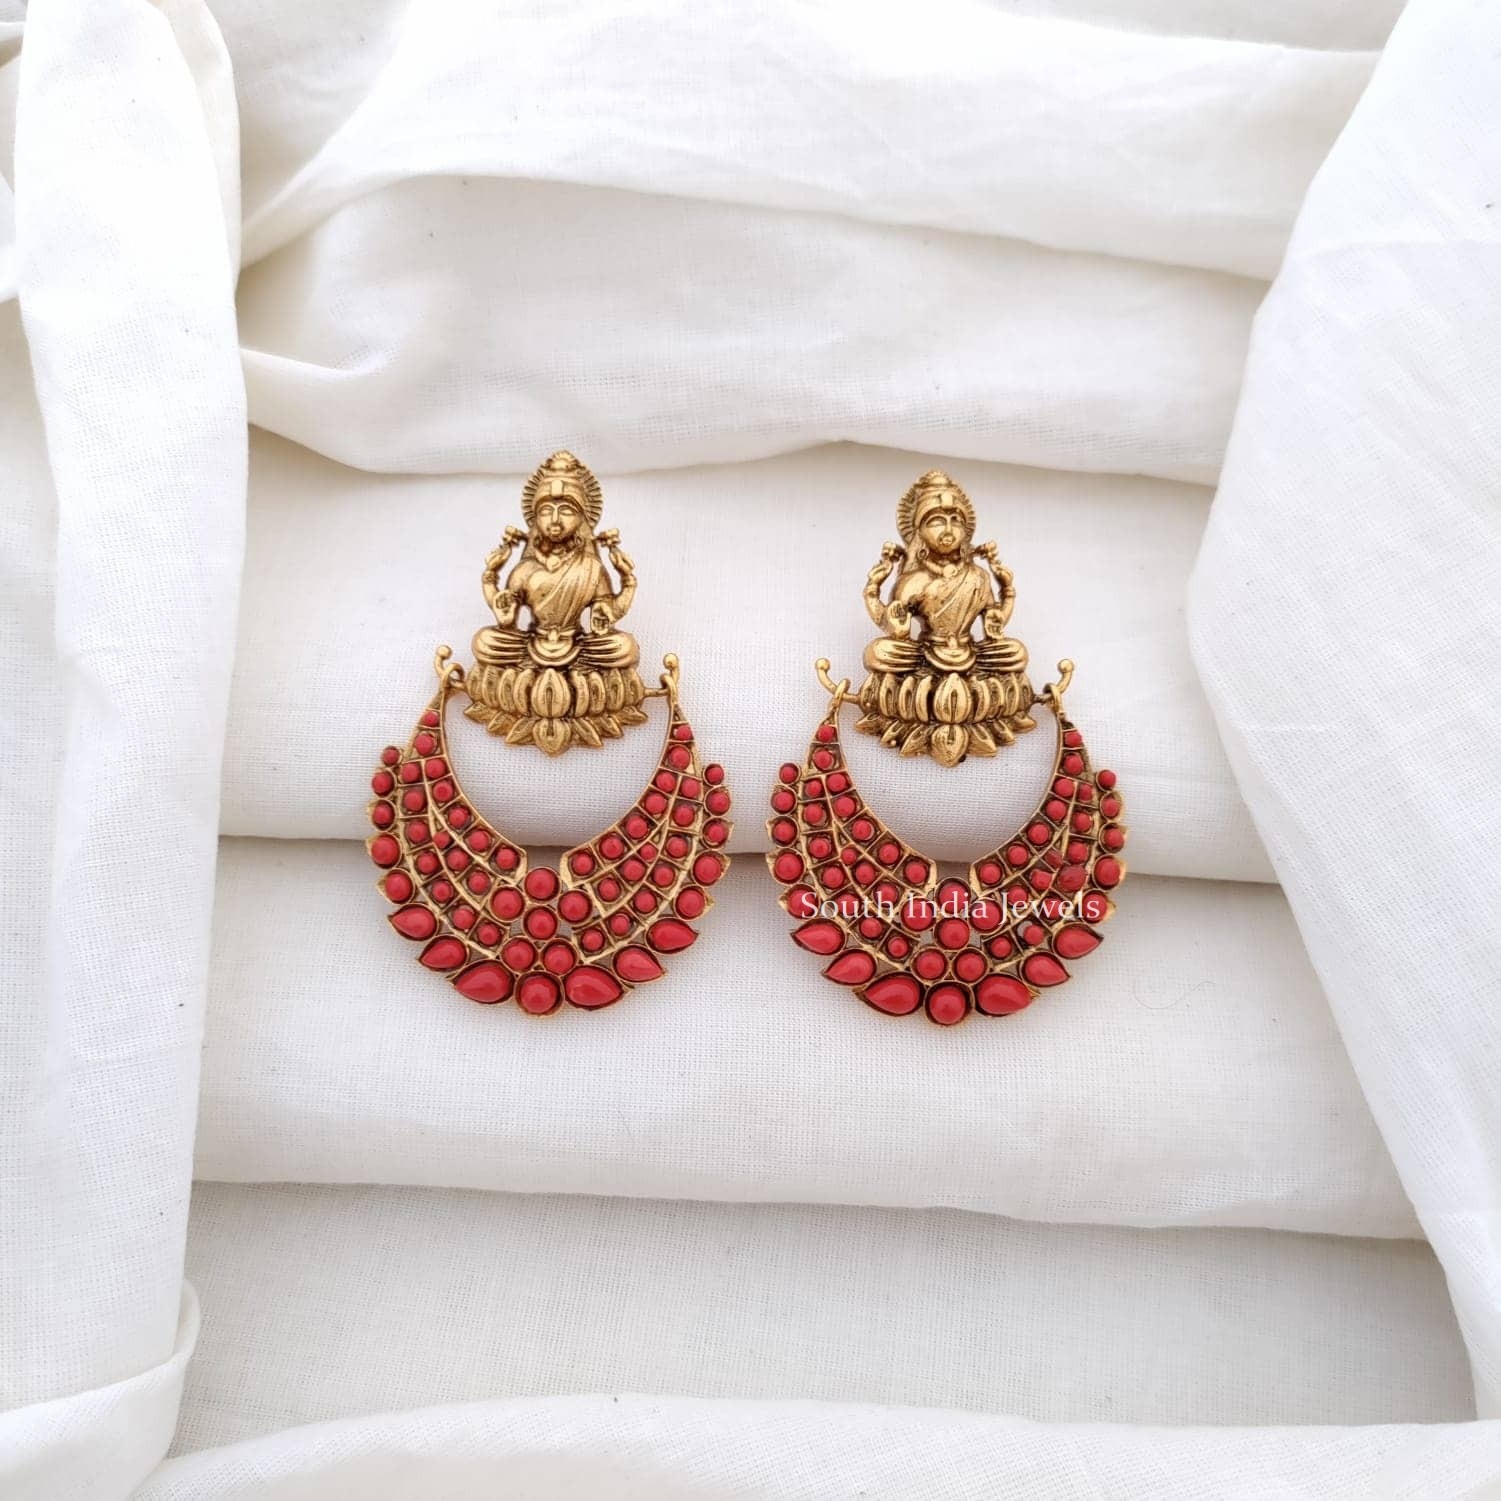 Exquisite Lakshmi Design Earrings